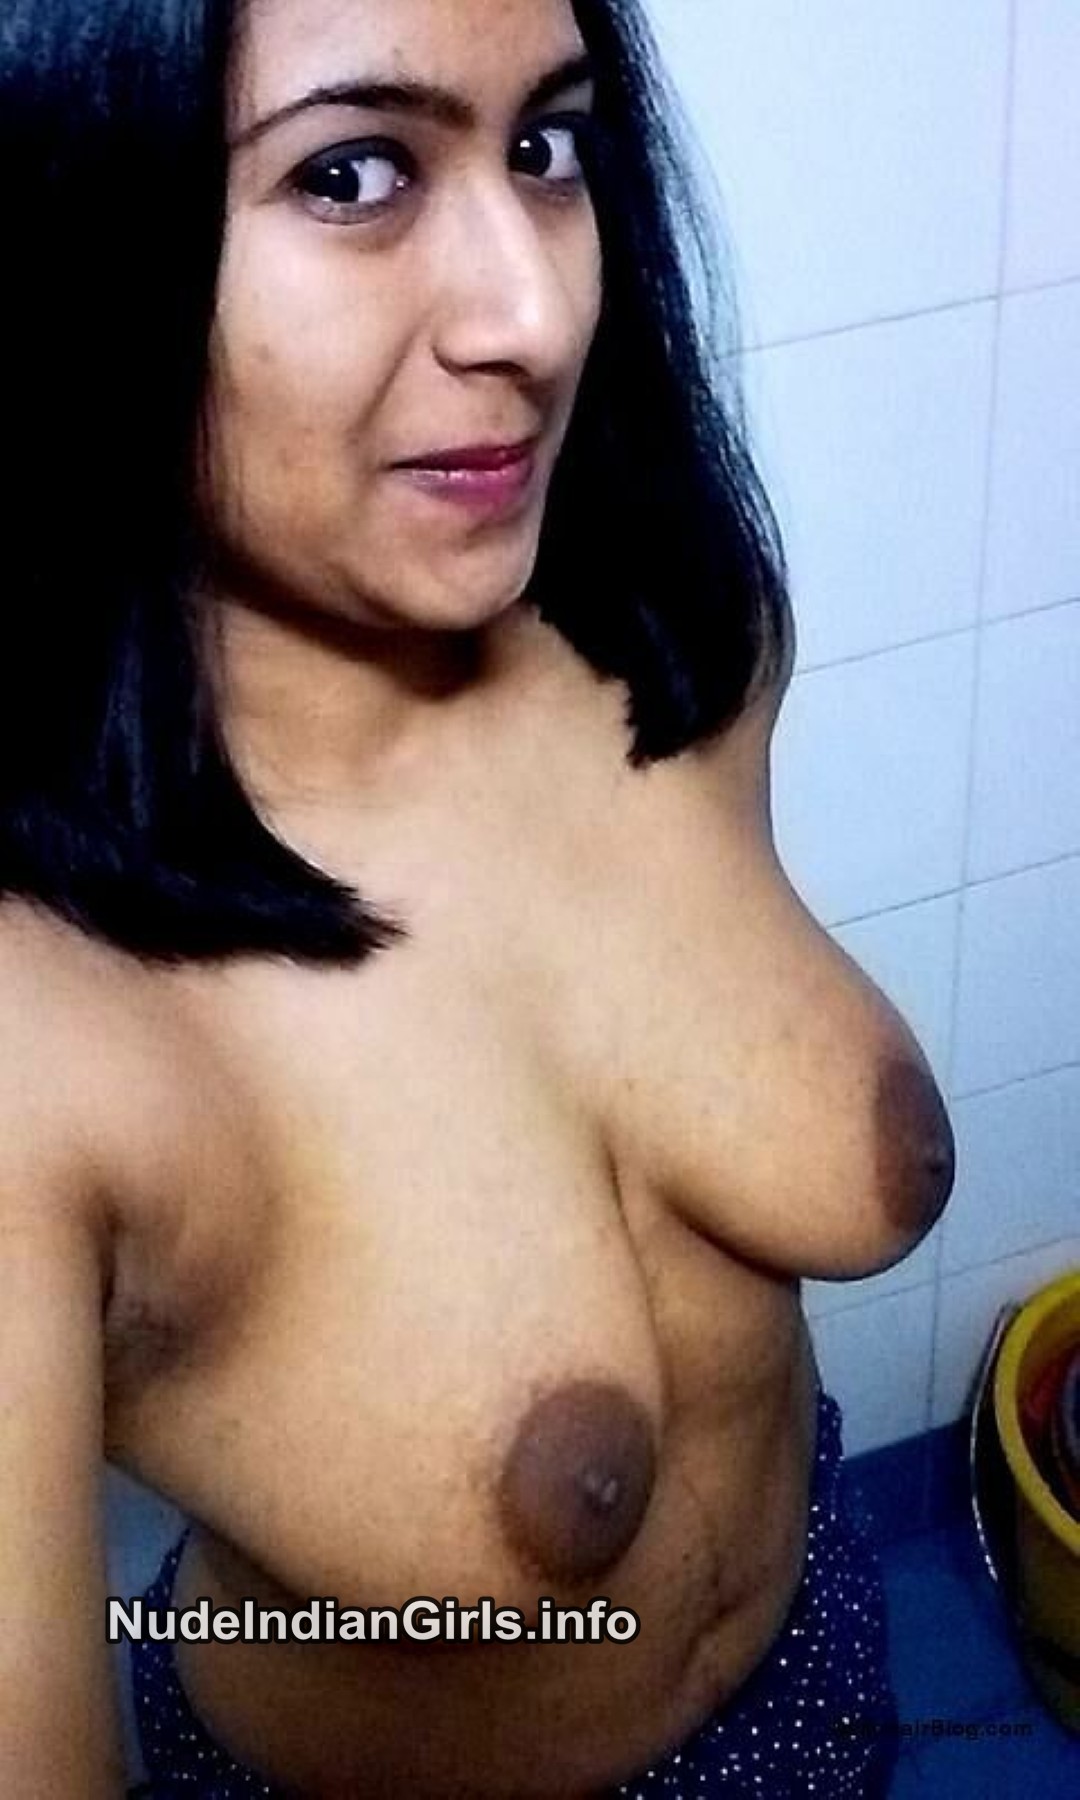 South Indian Girl Nude Photos (2).jpg